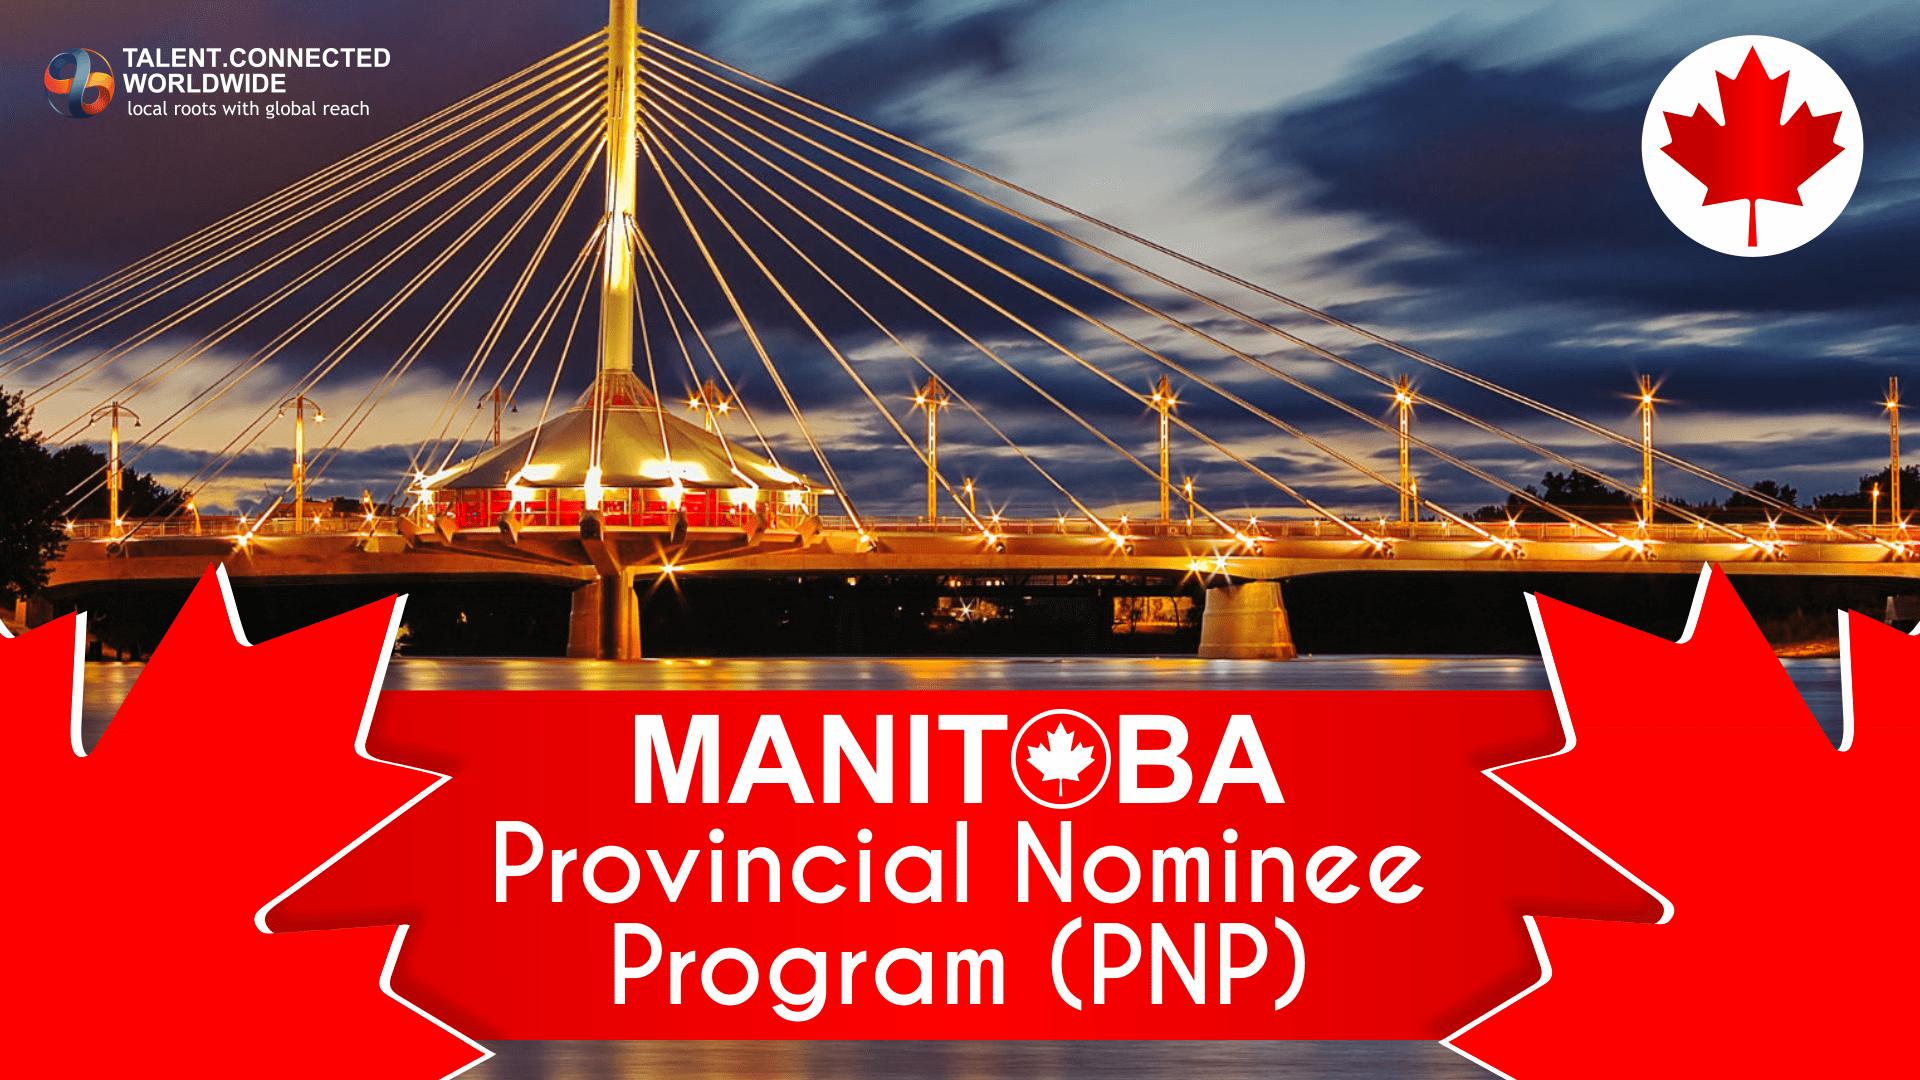 Manitoba Provincial Nominee Program (PNP)